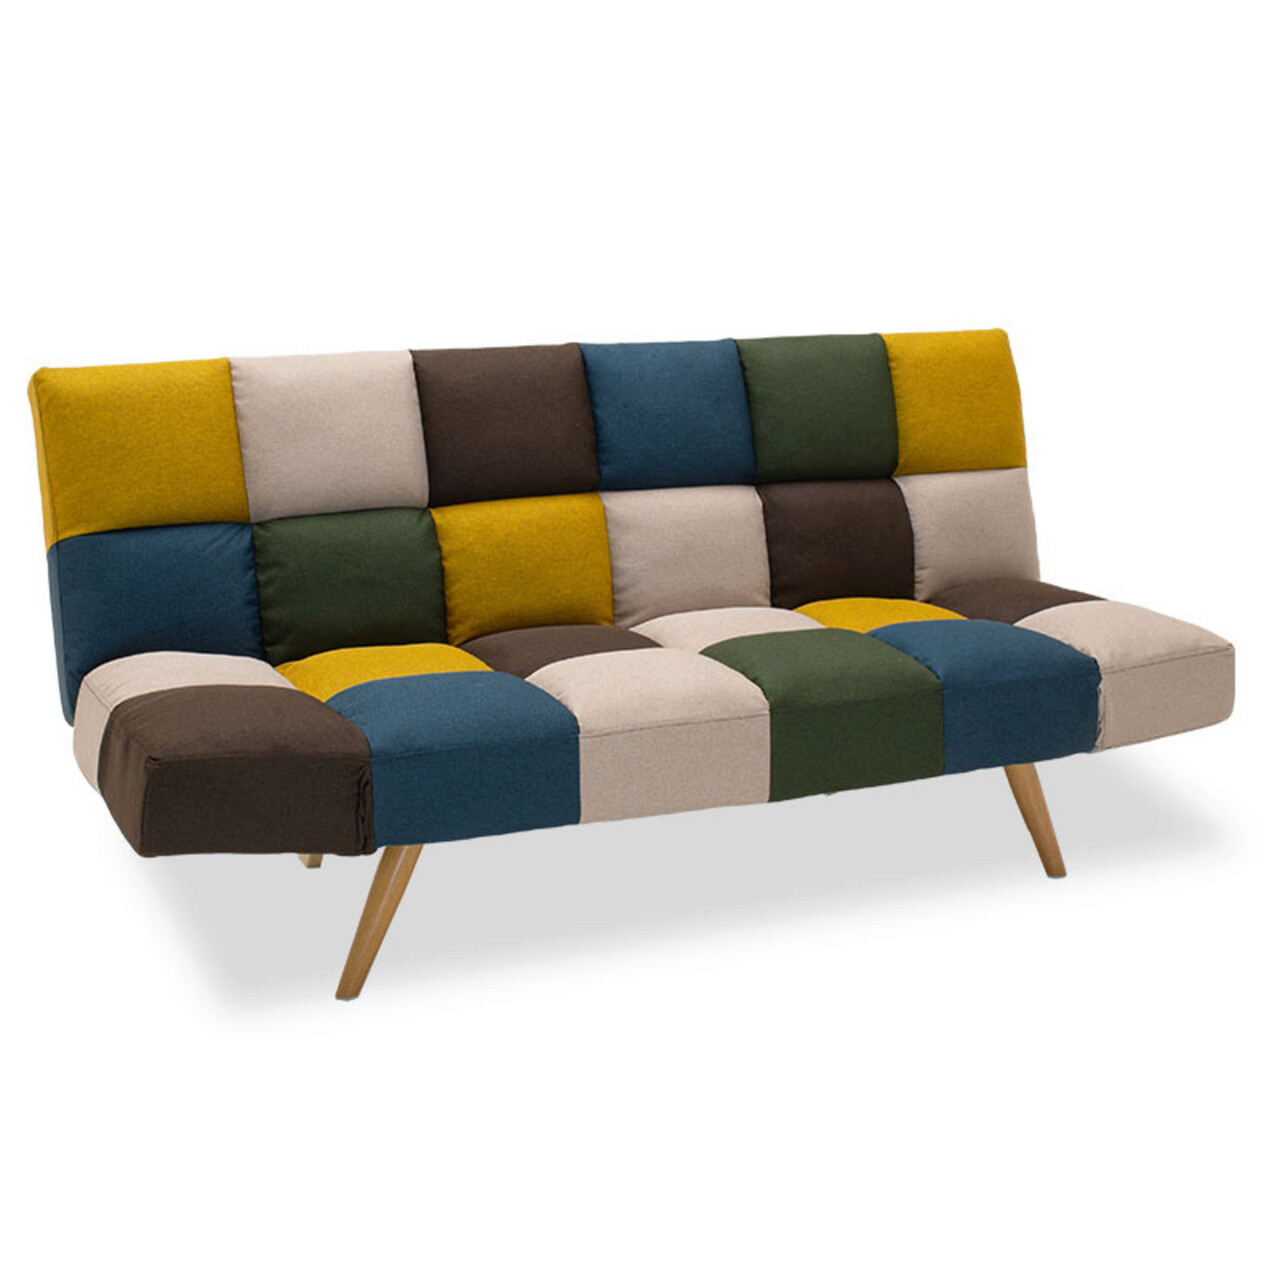 Set mobilier living 3 piese Lounge-1, Pakoworld, canapea extensibila 3 locuri / masuta / comoda TV, multicolor